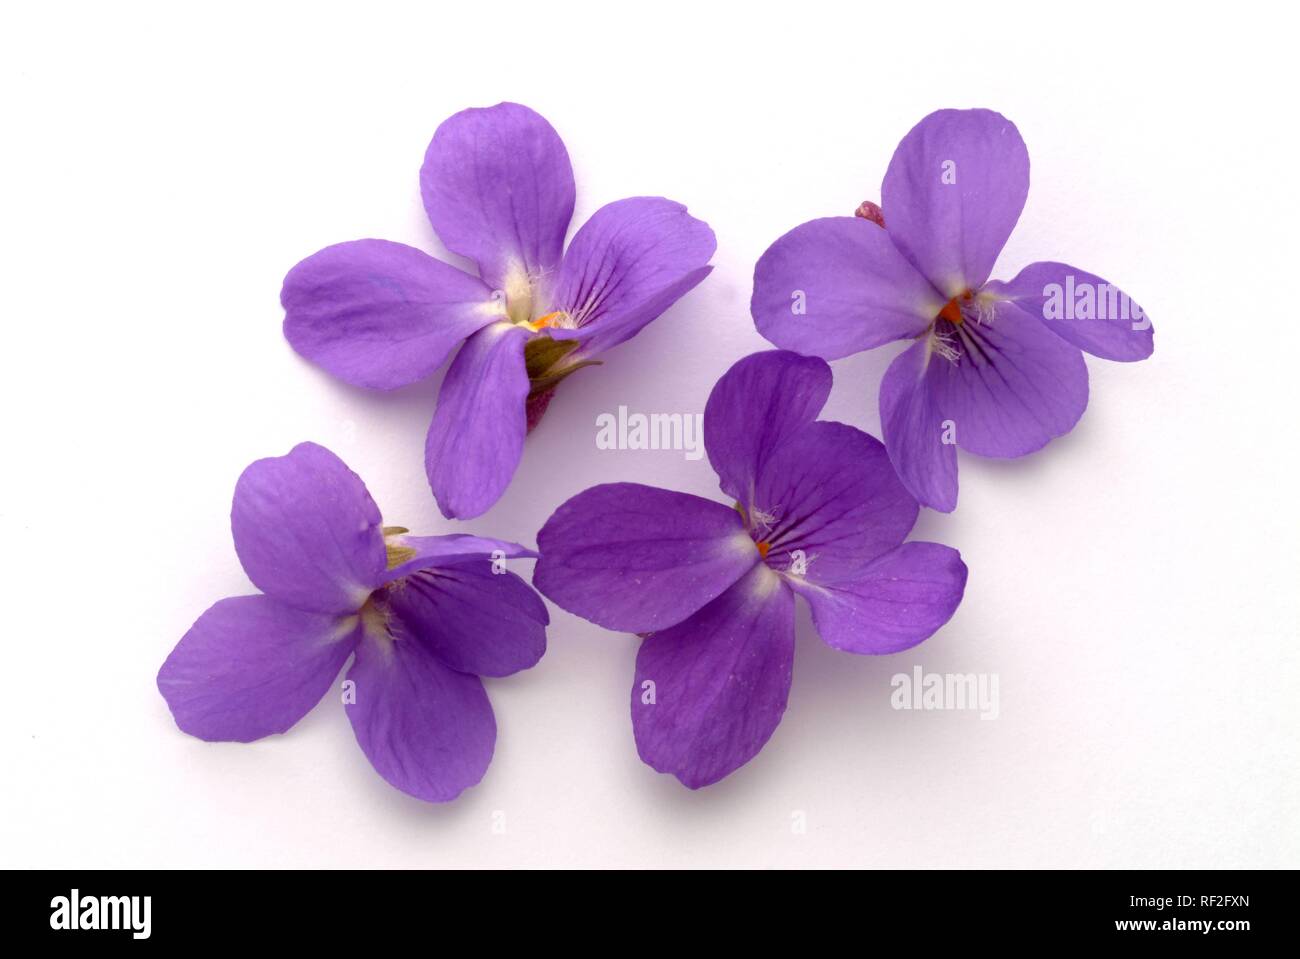 Violette odorante ou anglais (Violette Viola odorata), plante médicinale  Photo Stock - Alamy